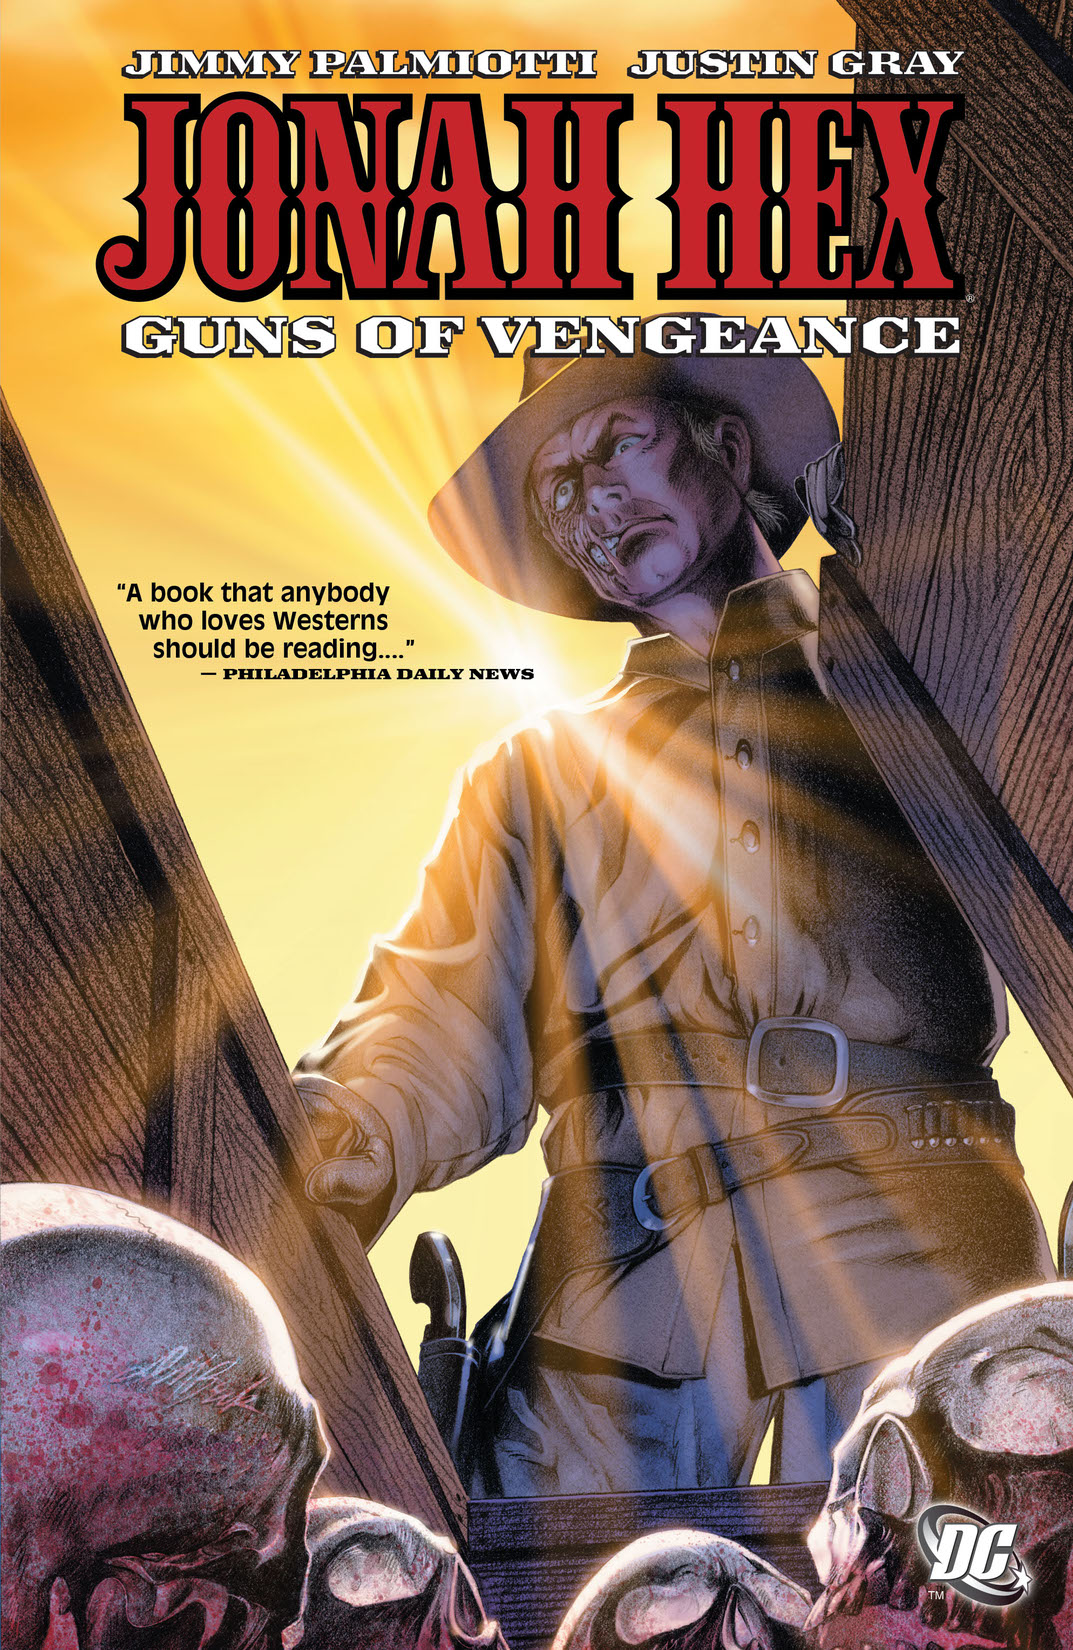 Jonah Hex: Guns of Vengeance Vol. 2 preview images